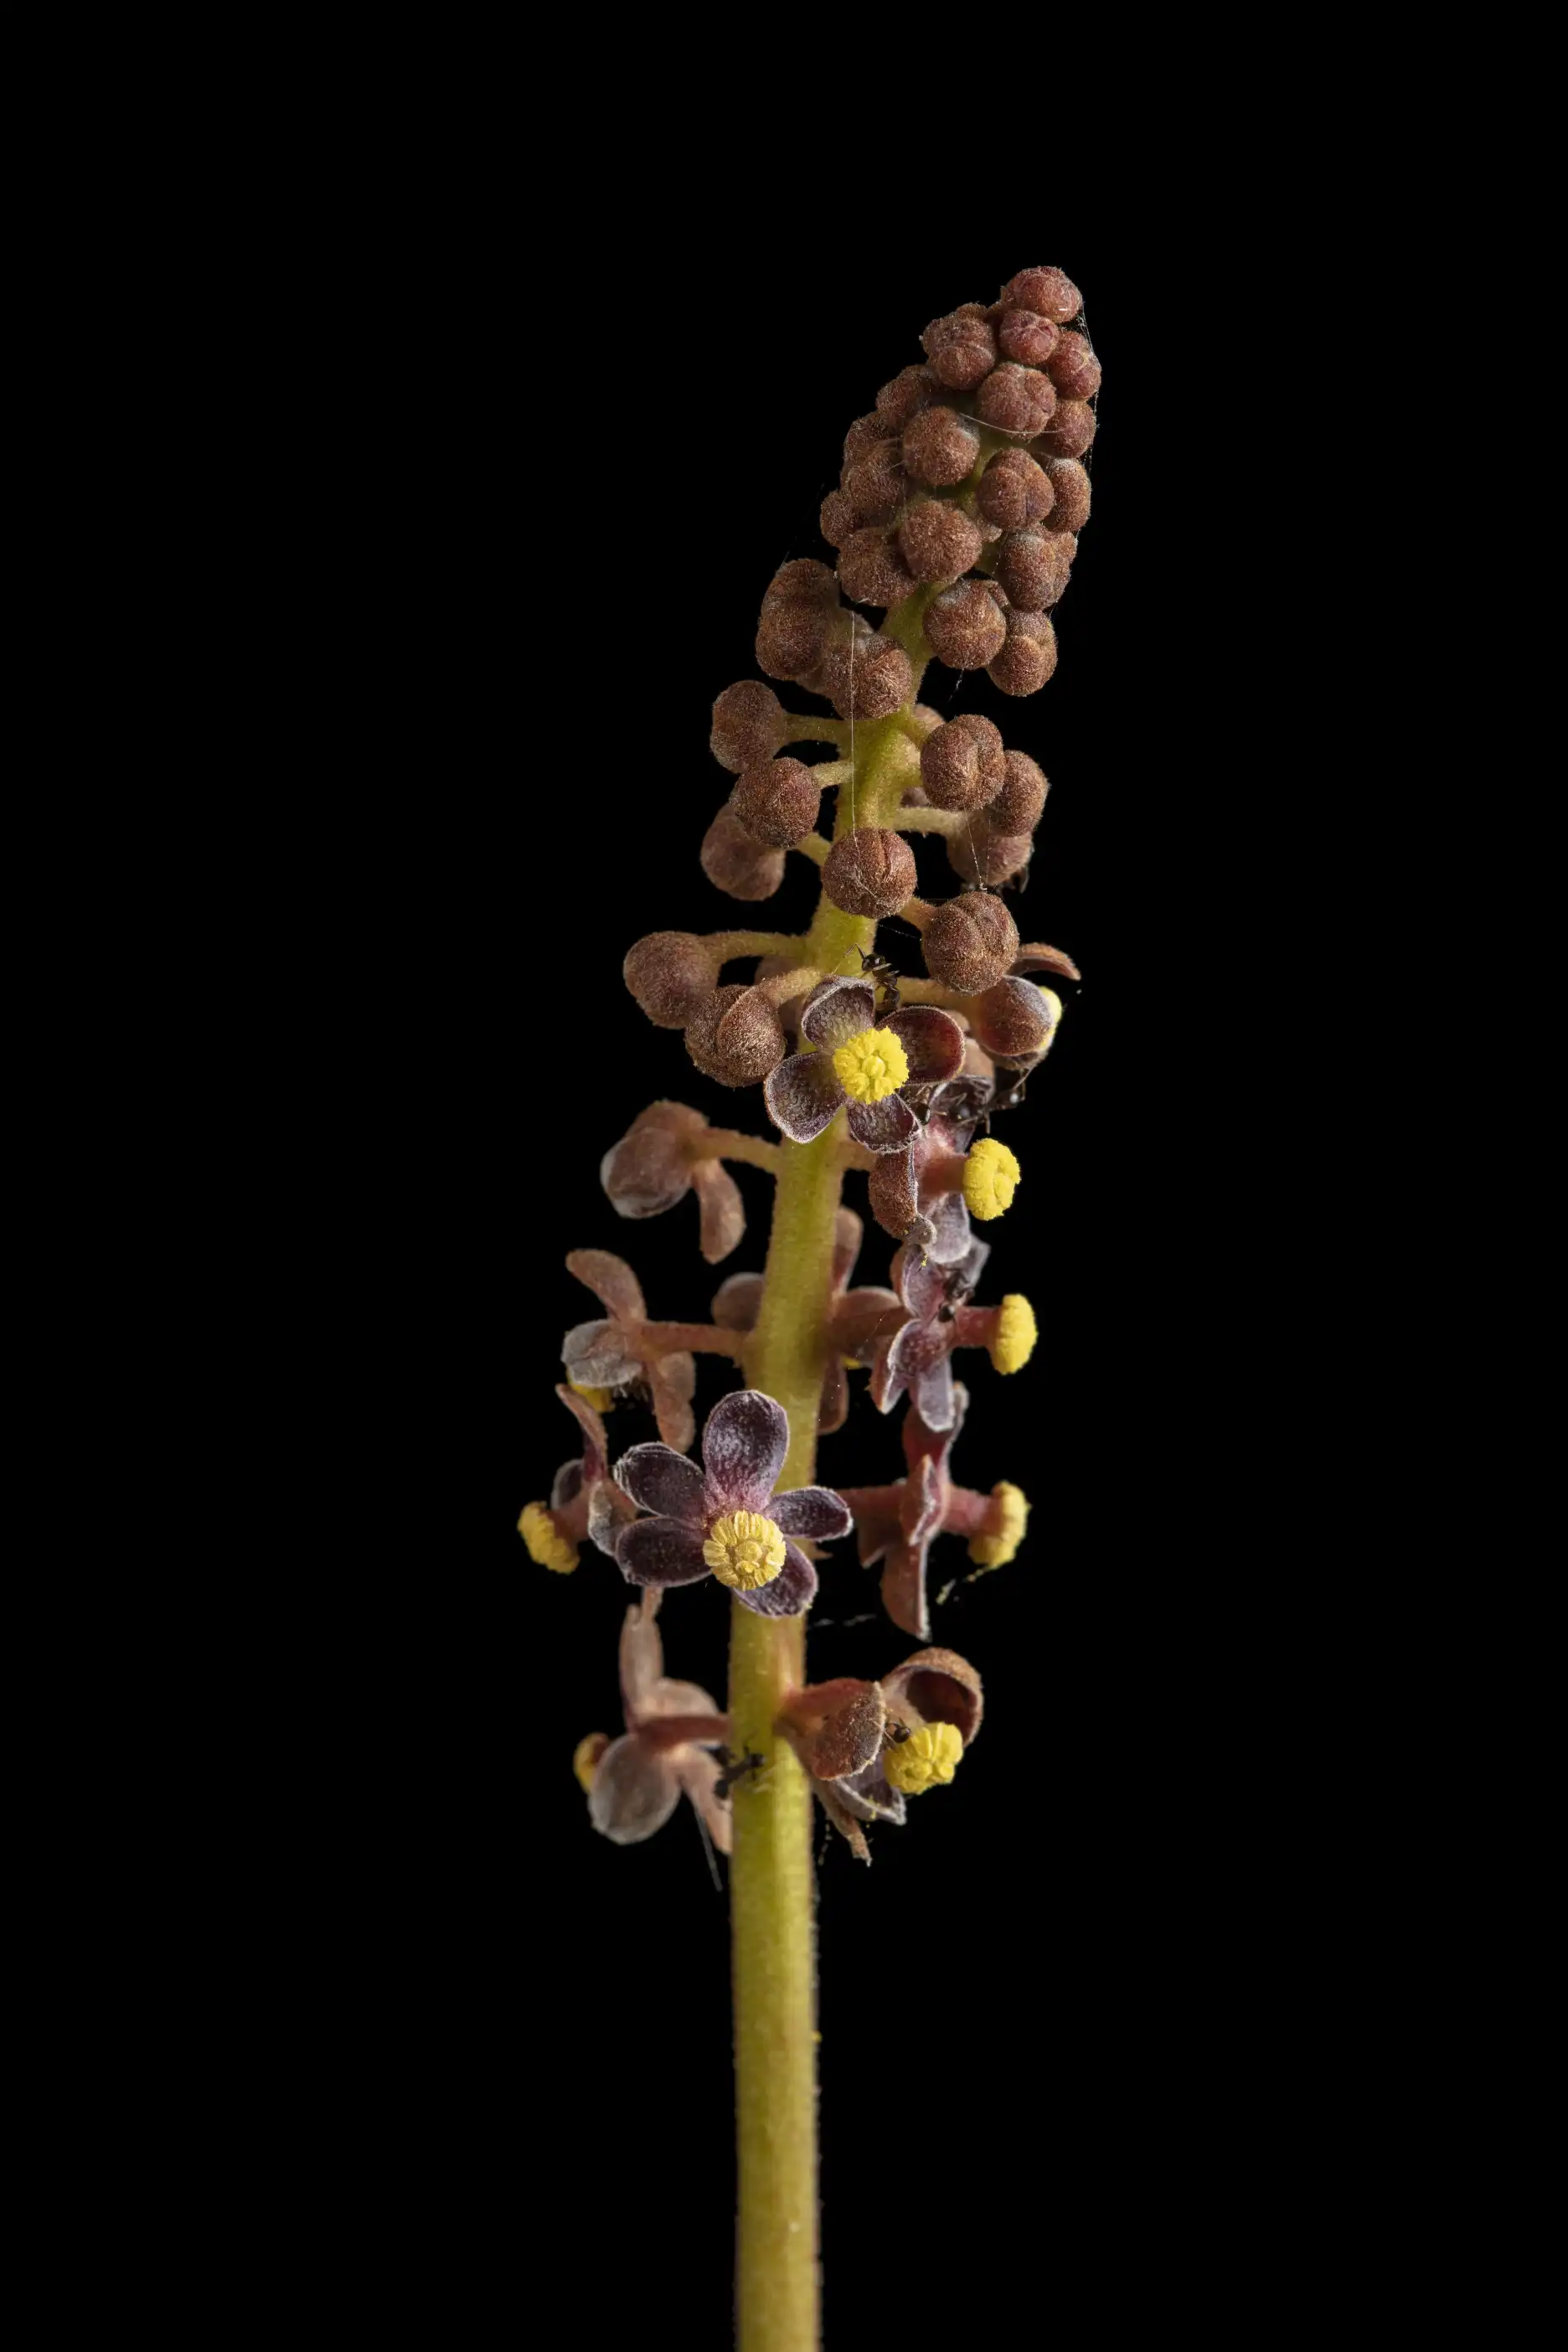 Nepenthes smilesii flowers